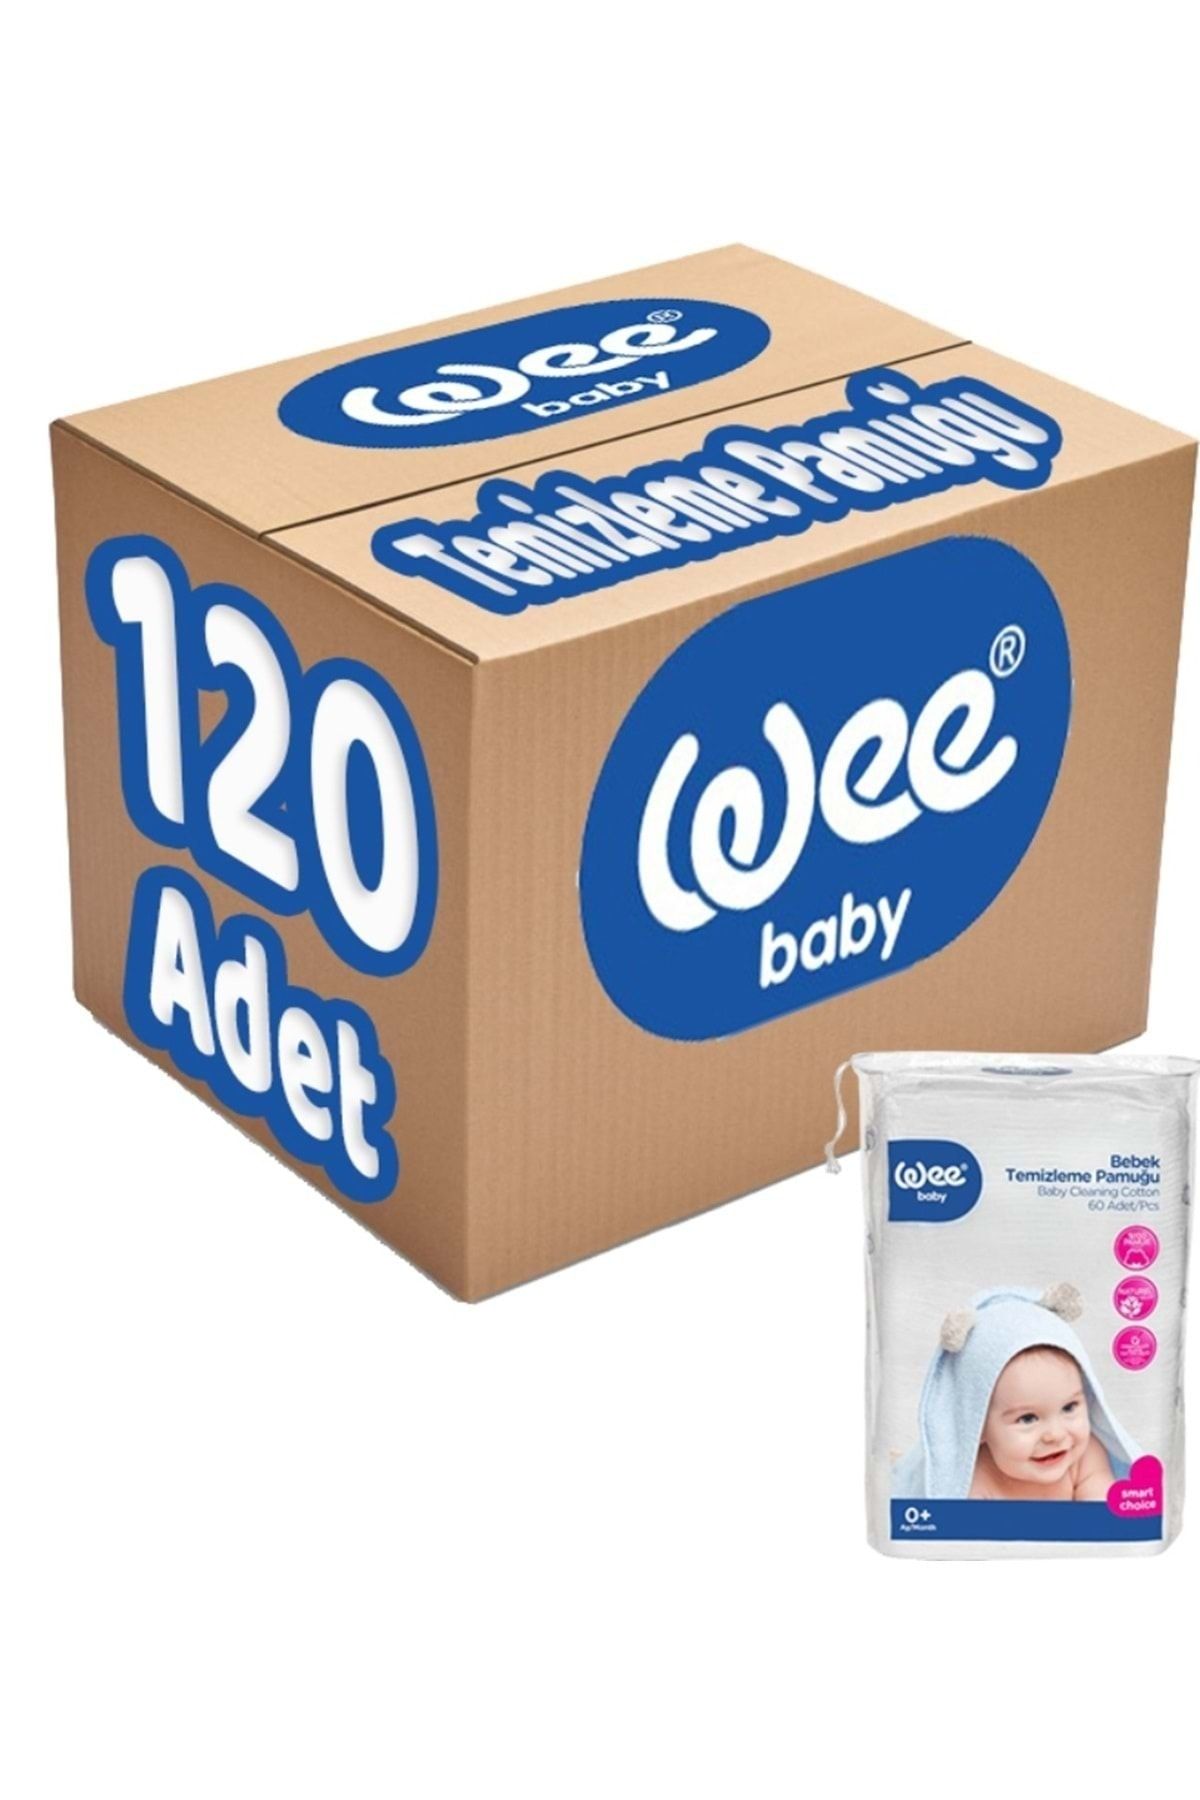 Wee Baby Bebek Temizleme Pamuğu 120 Adet (2pk*60)